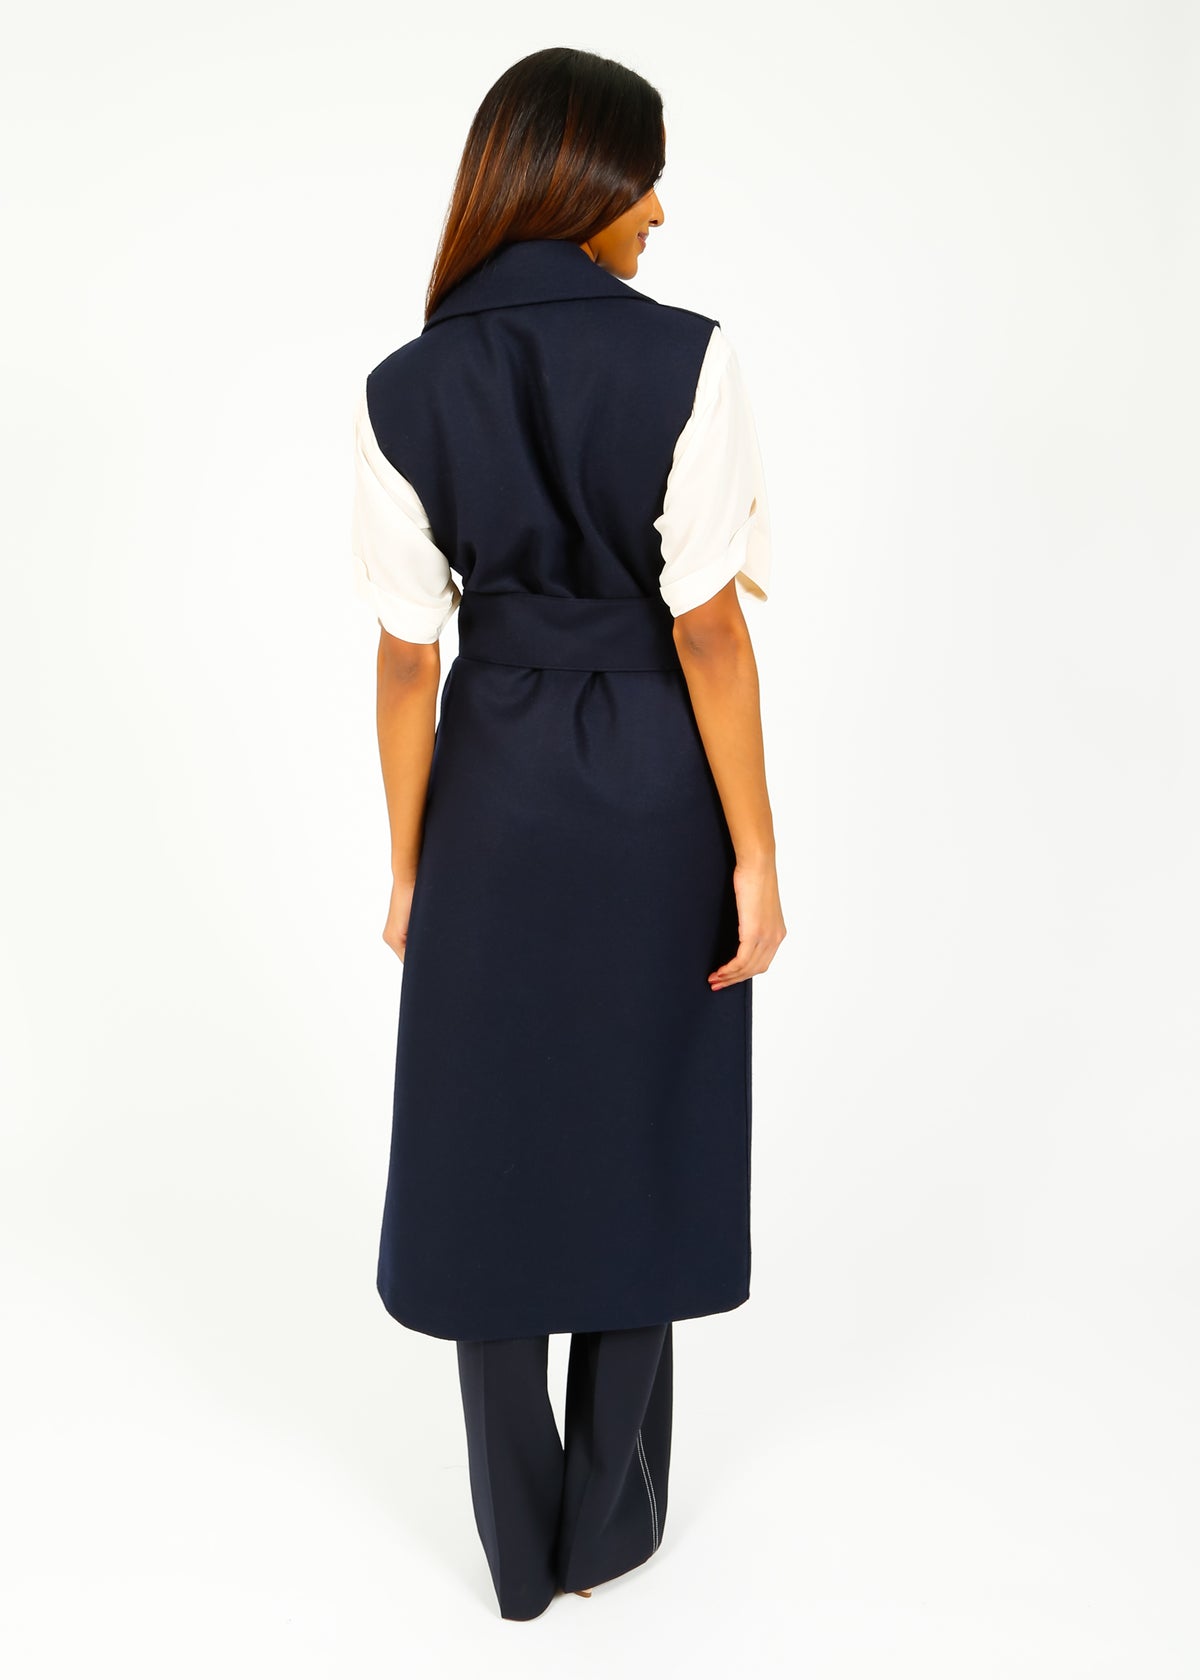 HW Pressed Wool Clutched Vest in Navy Blue